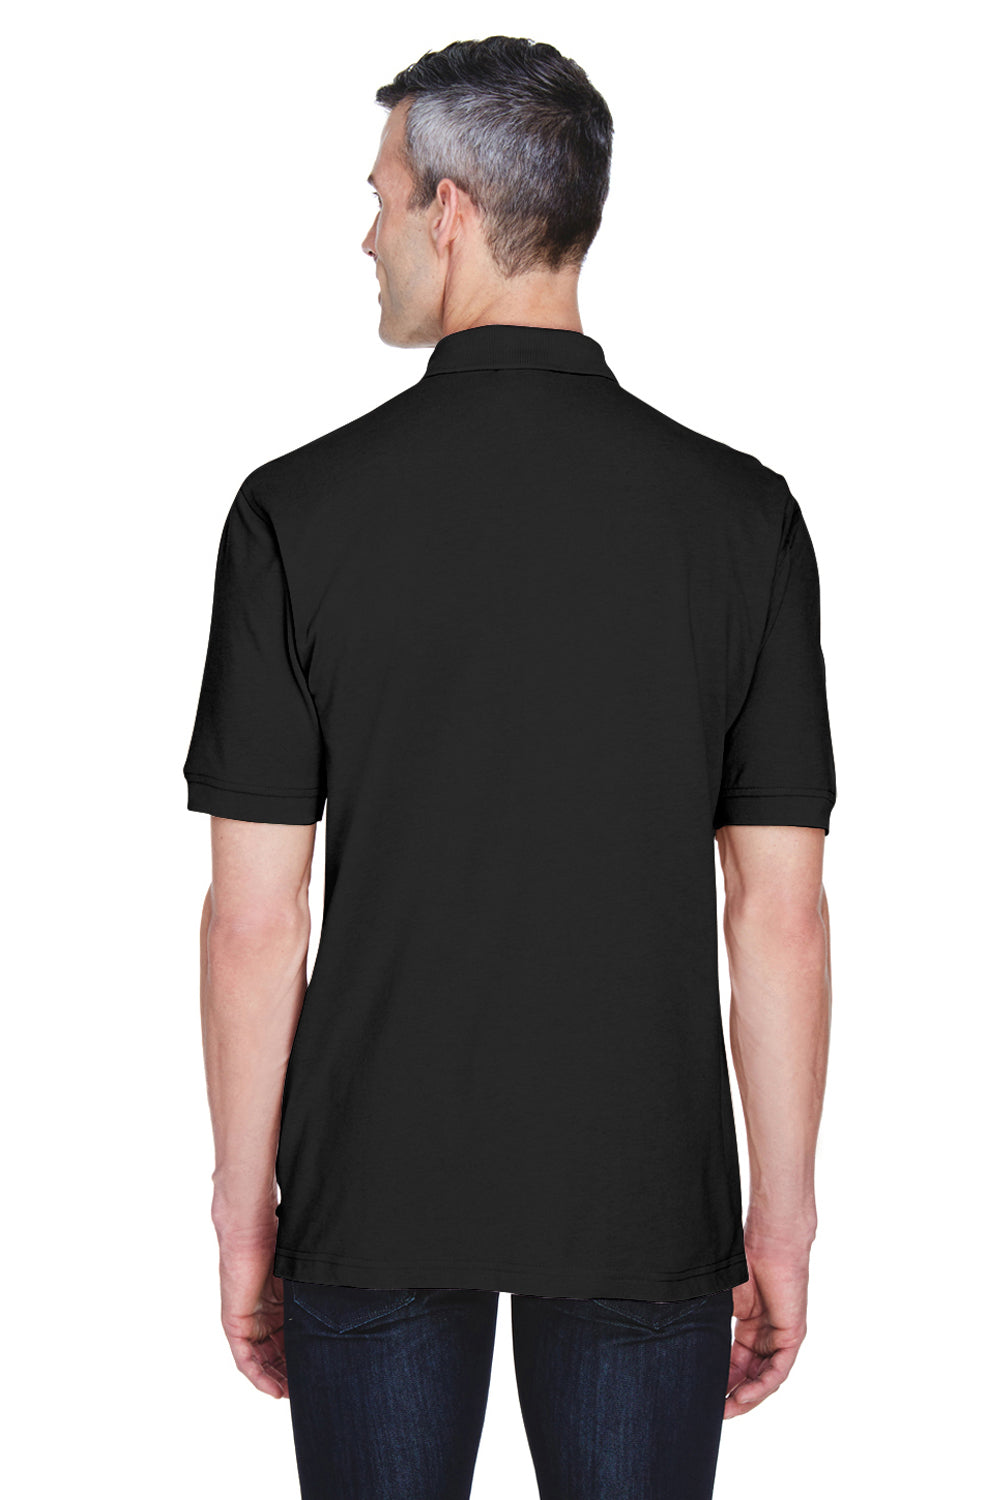 Harriton M265P Mens Easy Blend Wrinkle Resistant Short Sleeve Polo Shirt w/ Pocket Black Back